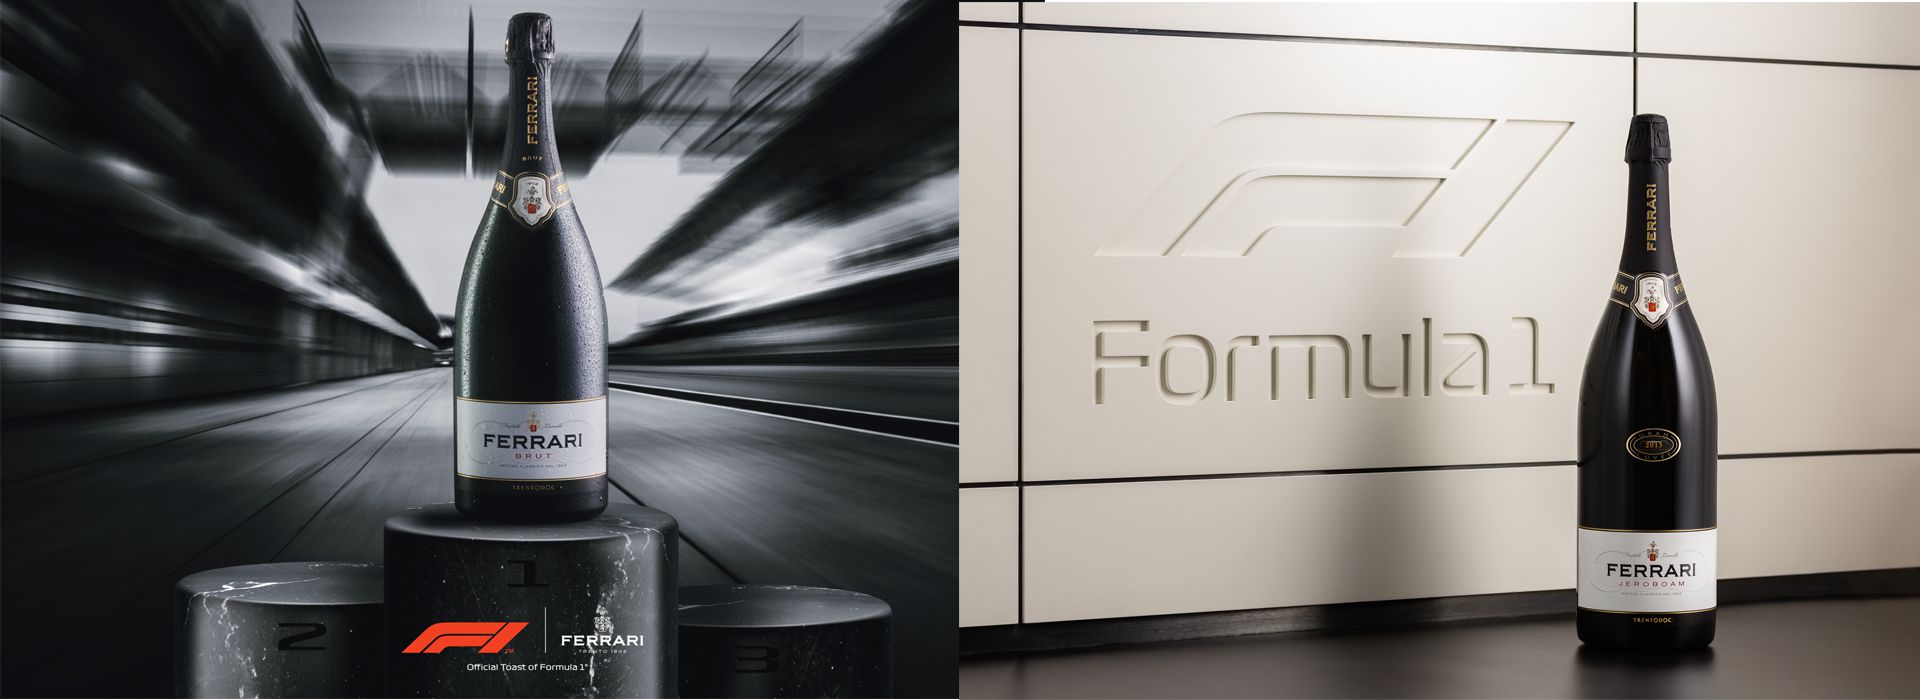 Banner-Ferrari-Formula1.png